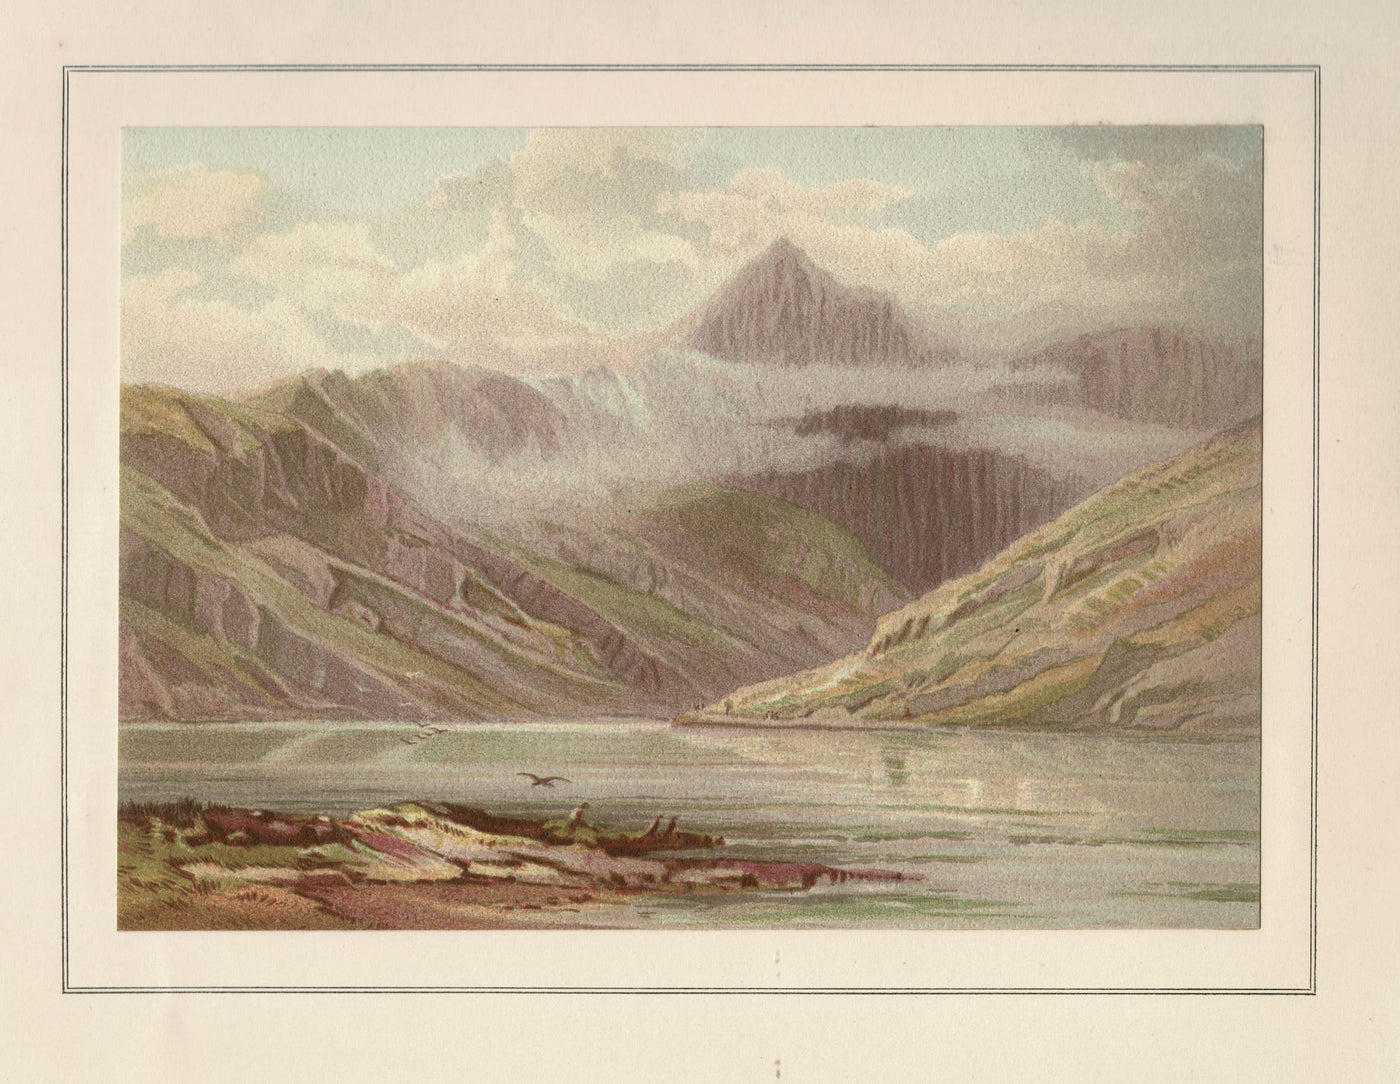 Snowdon Snowdonia Wales antique print 1879